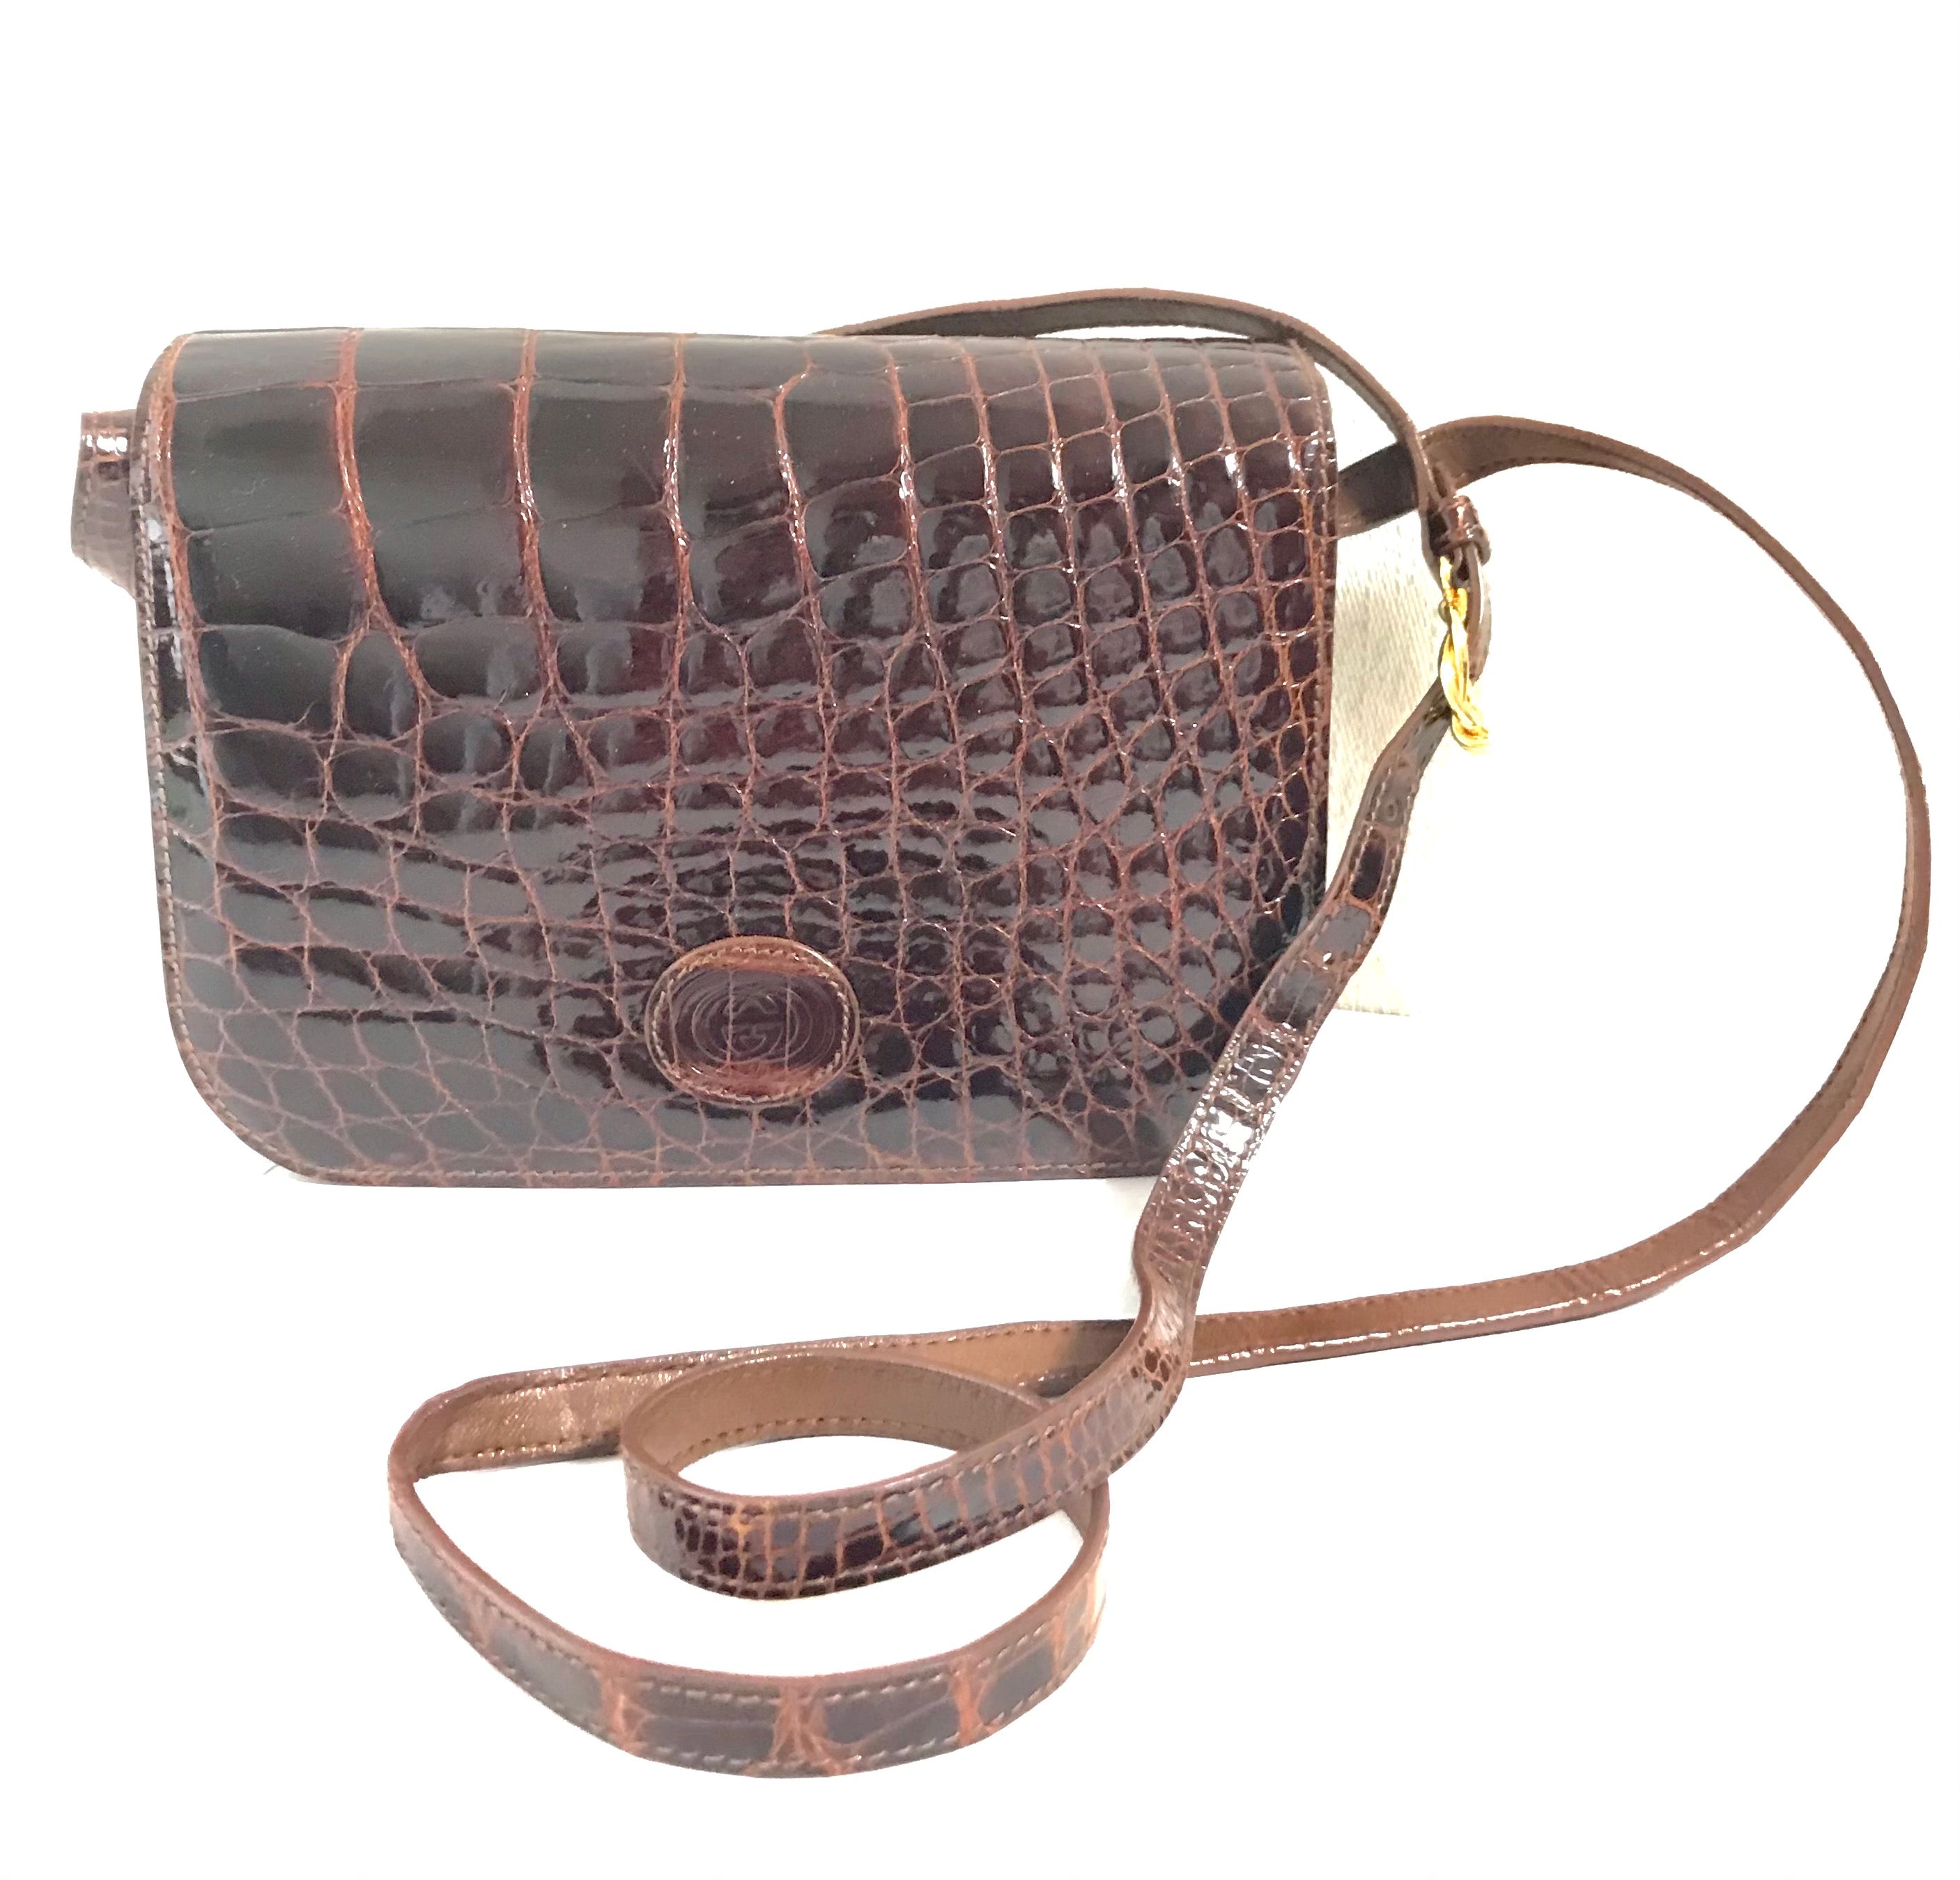 Vintage GUCCI brown crocodile leather shoulder bag with GG mark. Unisex. Rare masterpiece.